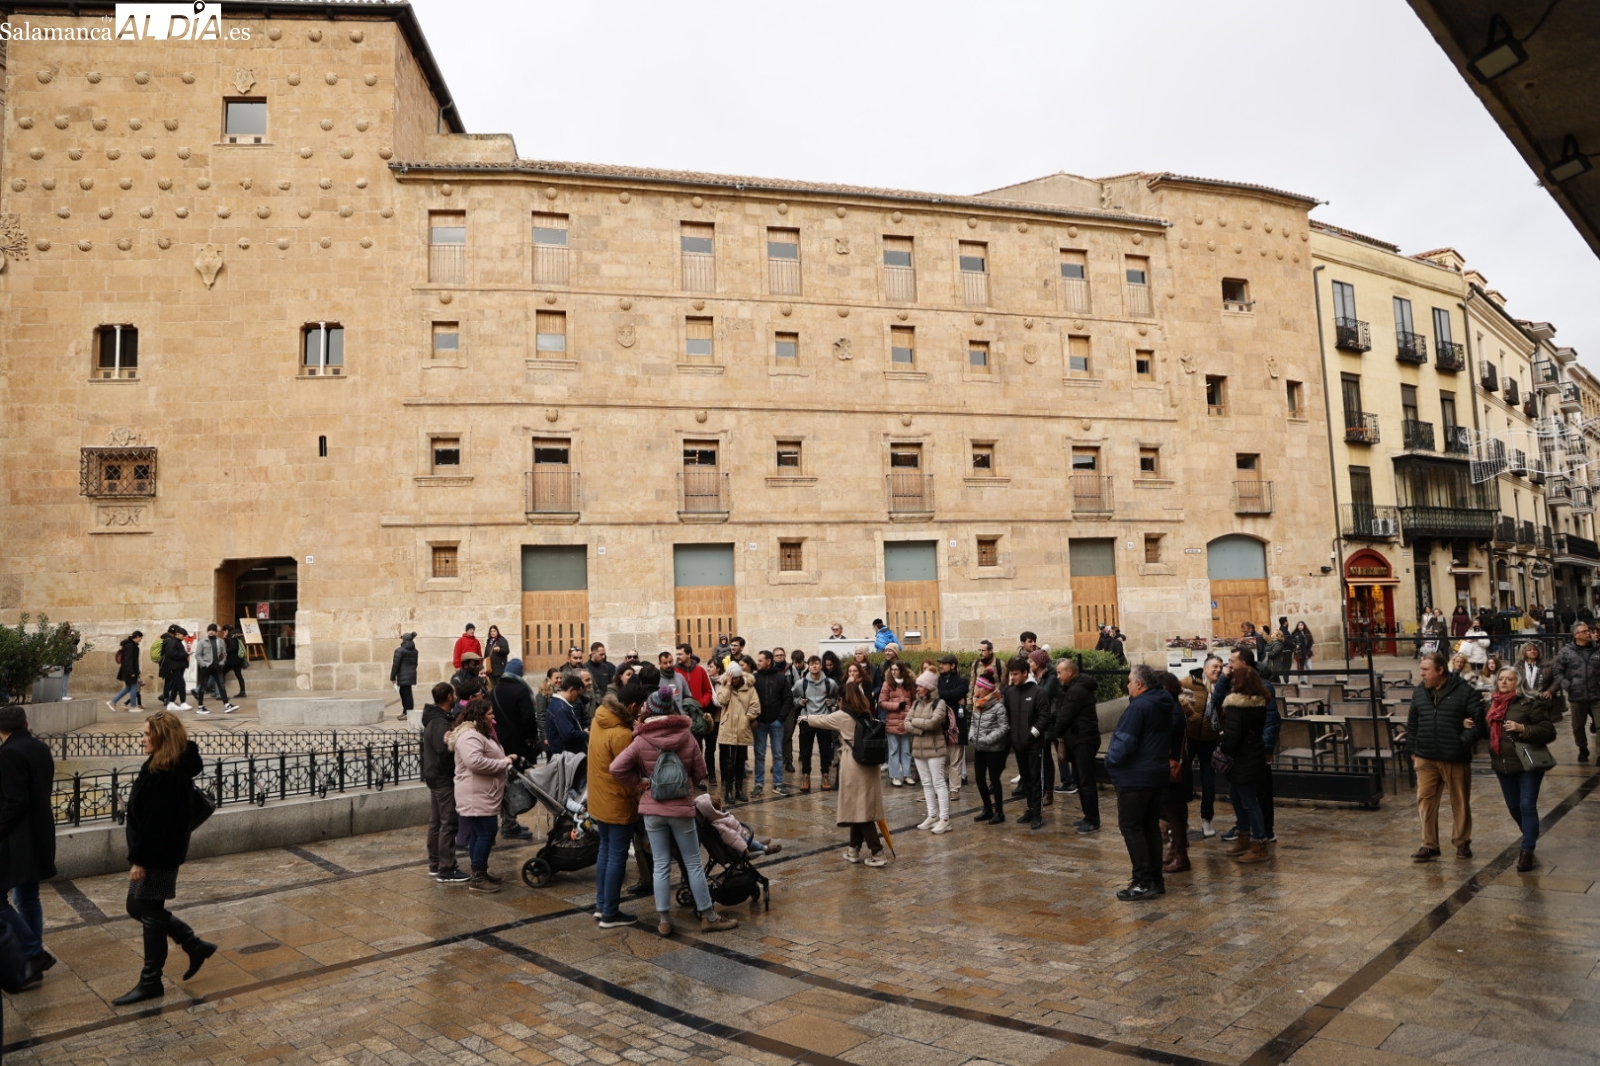 Grupos de turistas en visitas guiadas por Salamanca. Fotos: David Sañudo